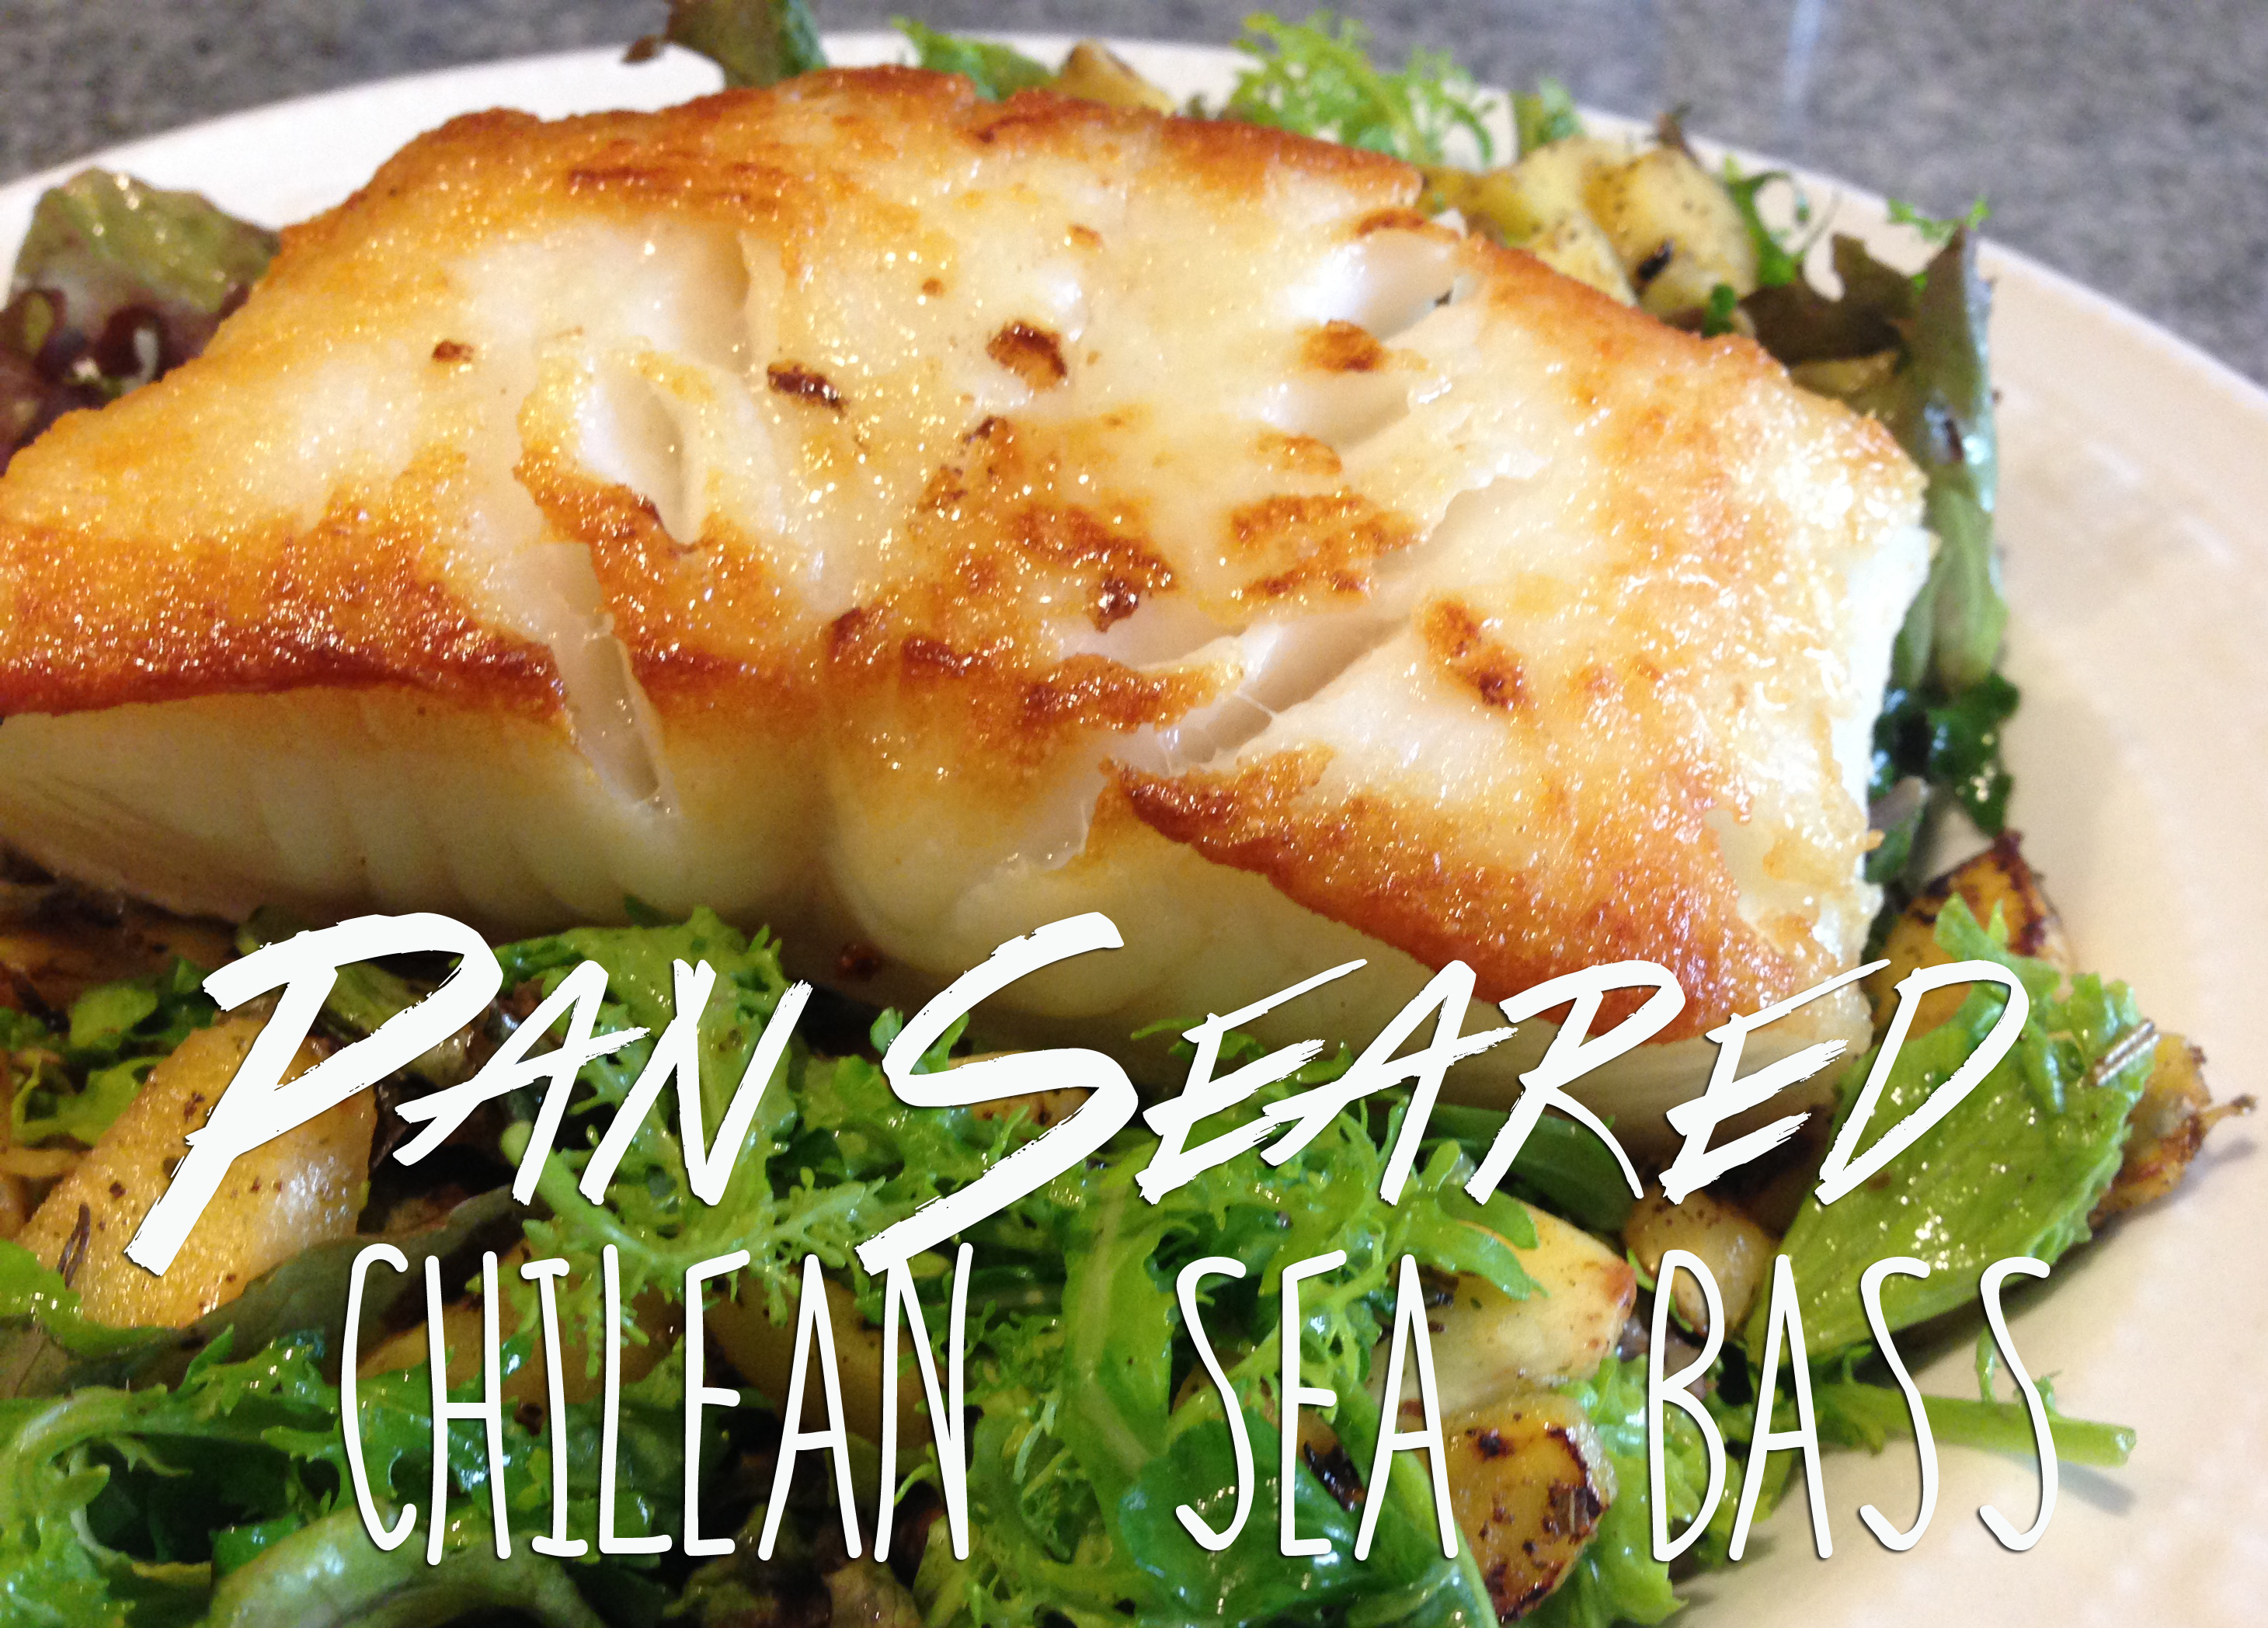 RECIPE FOR CHILEAN SEA BASS PAN SEARED